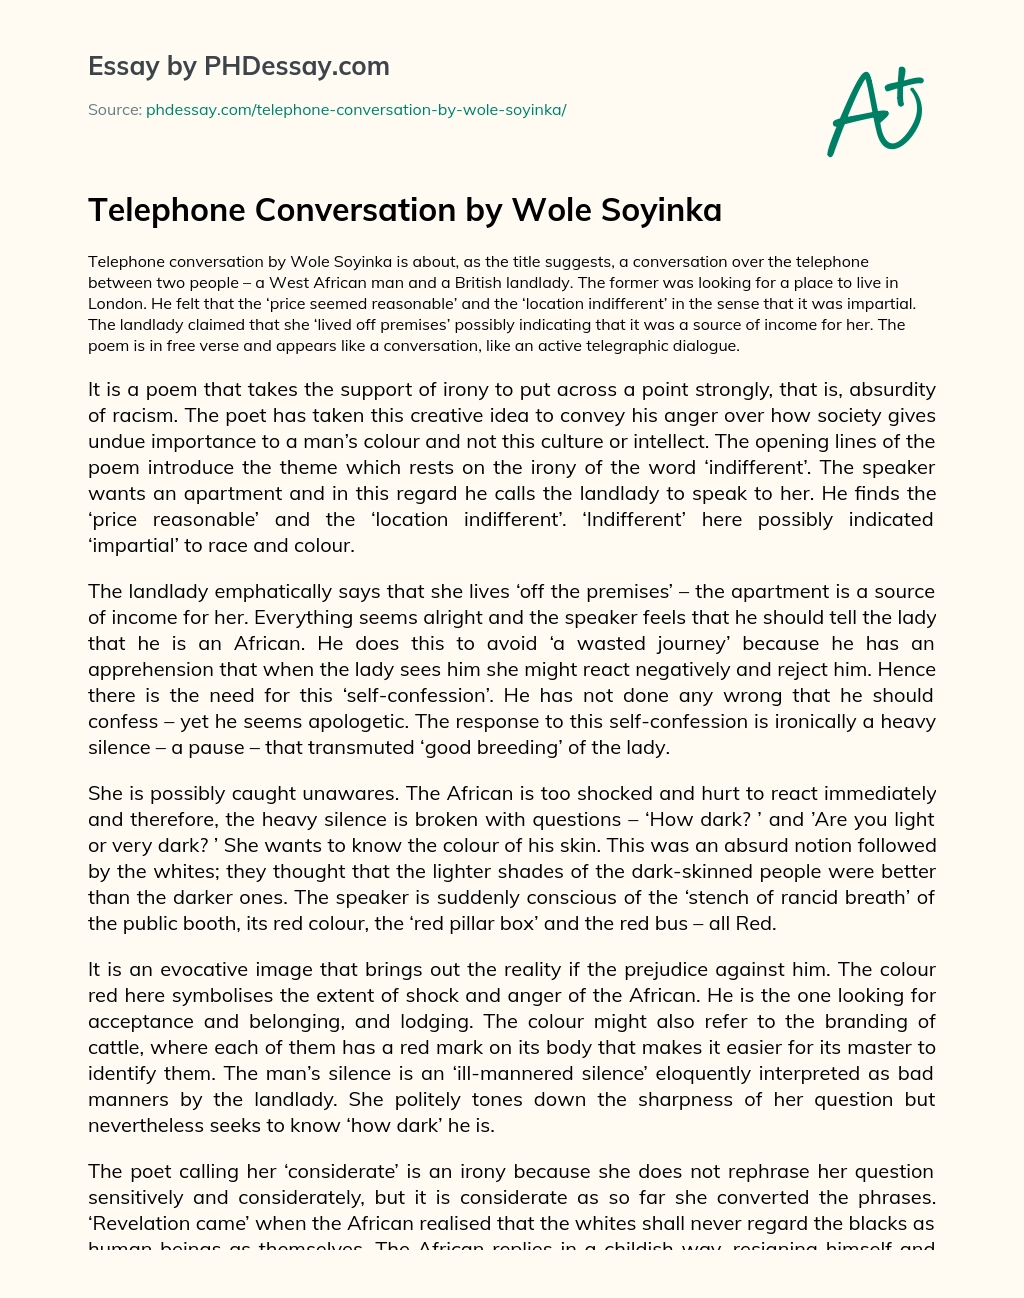 Telephone Conversation by Wole Soyinka essay